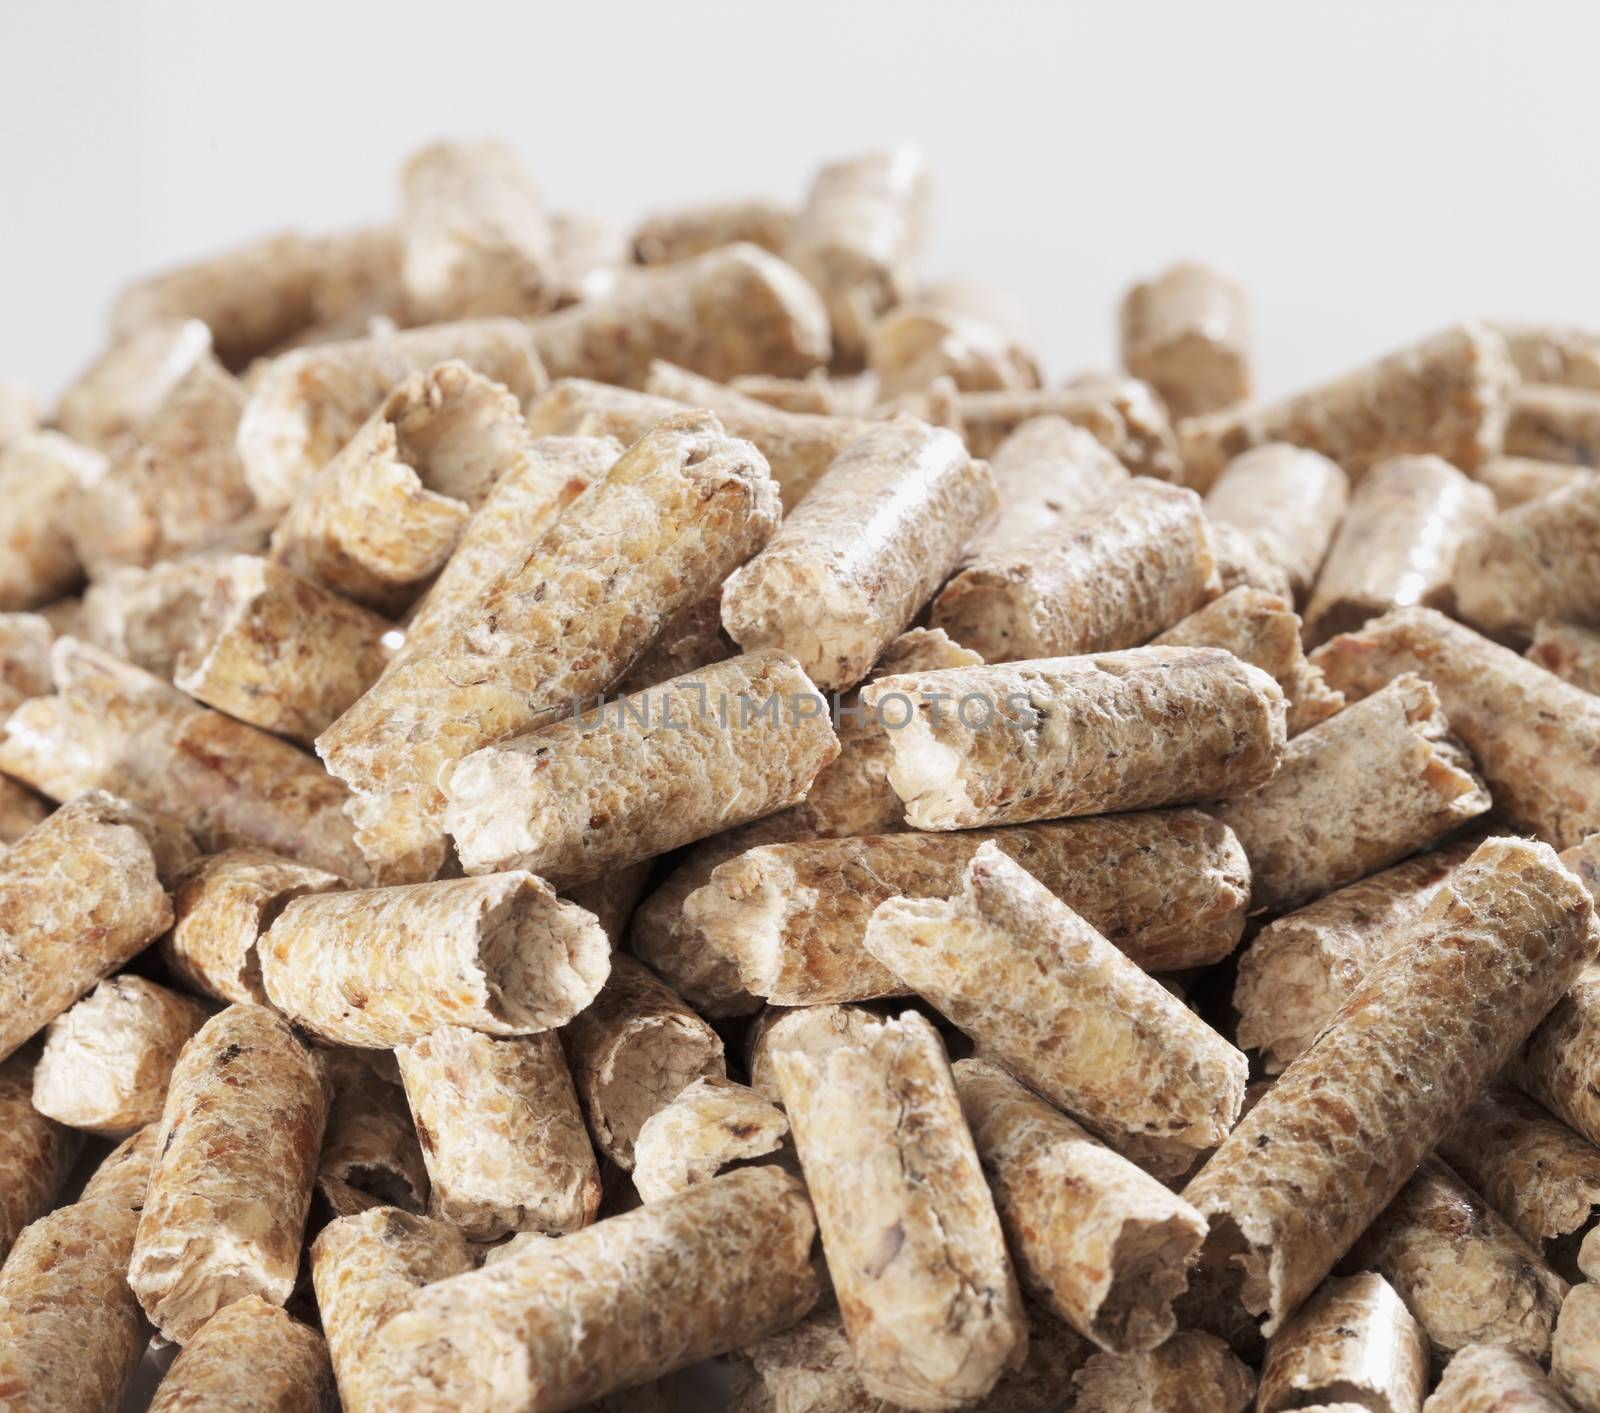 Alternative fuel: Wood pellets made of sawmill waste.